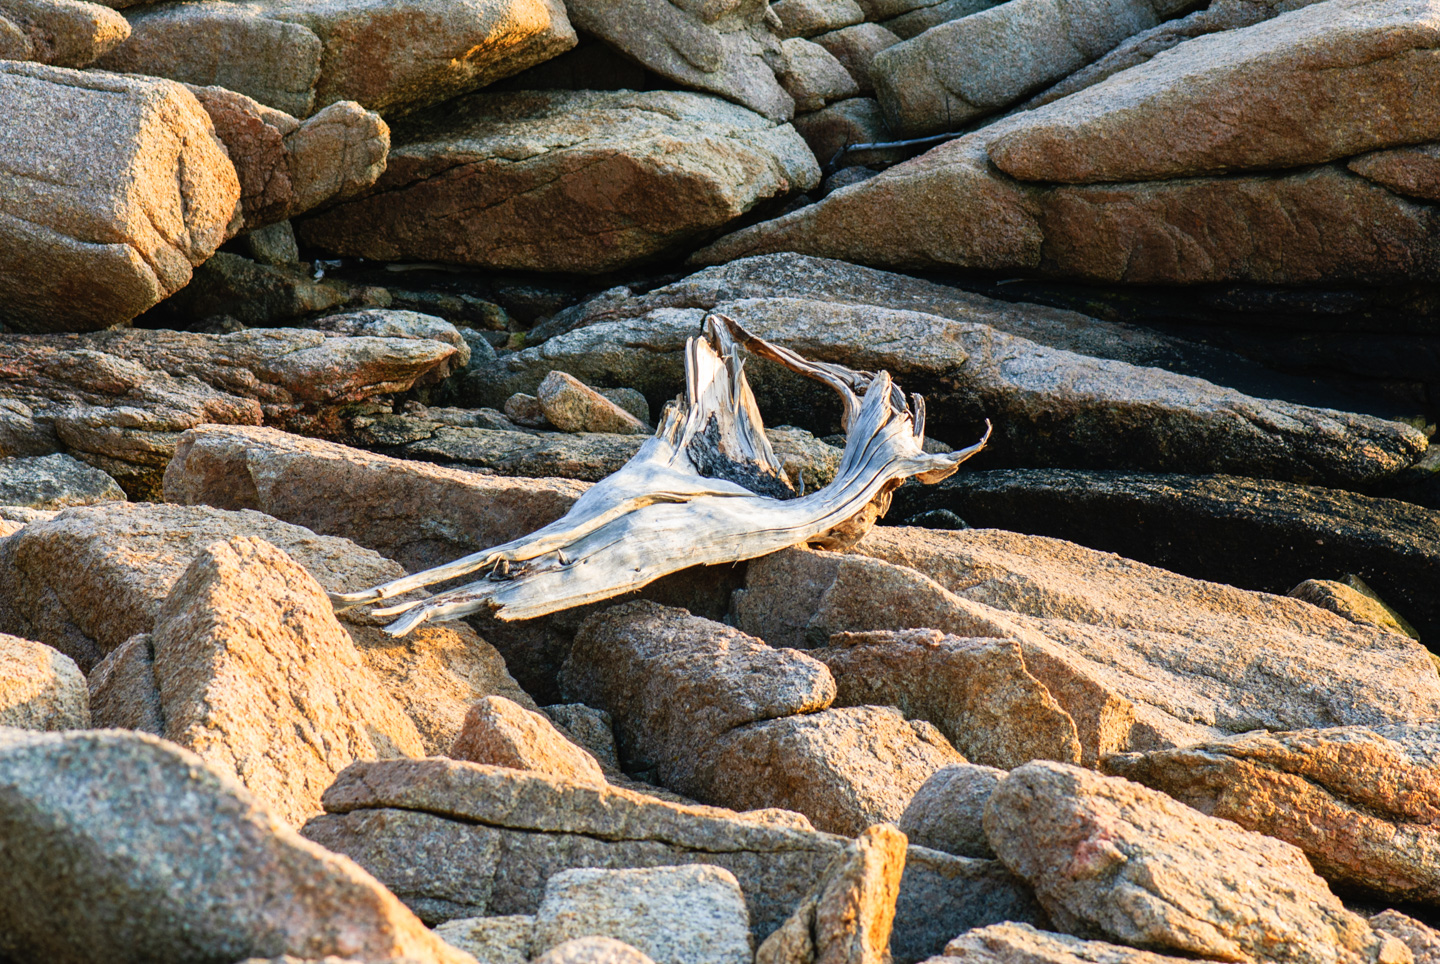 Driftwood on rocks, Barred Island